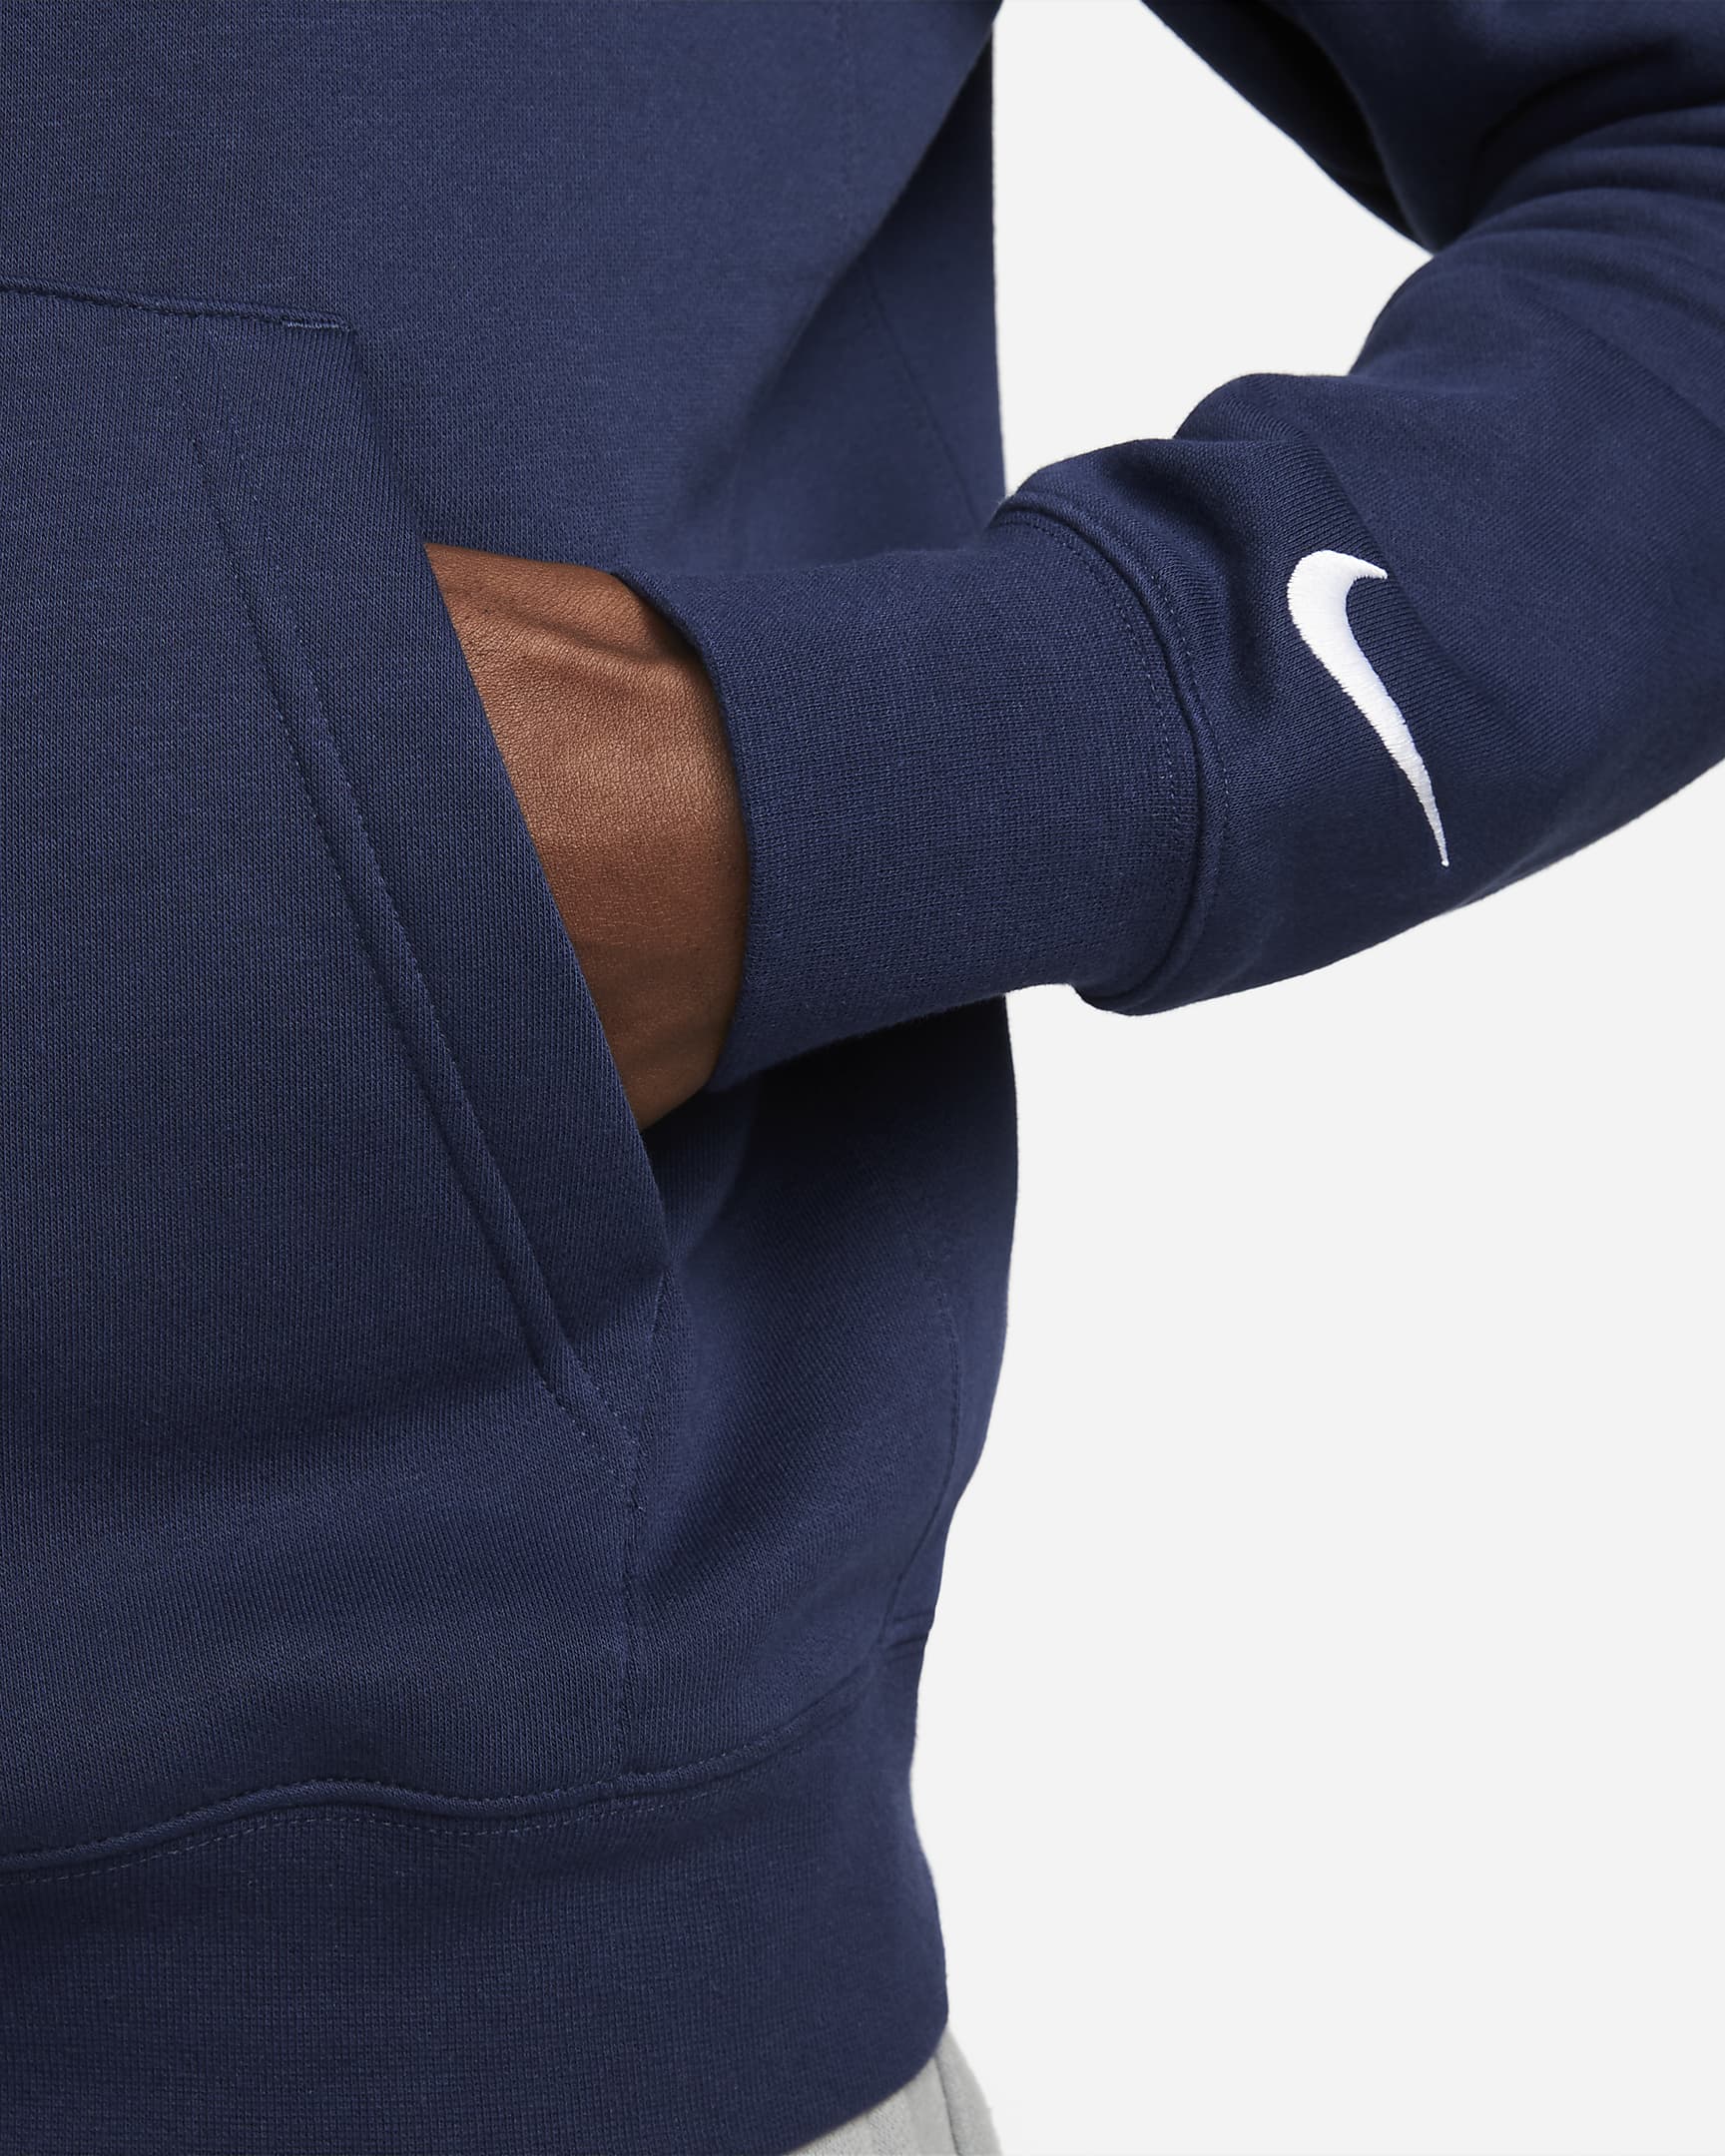 FFF Club Fleece Men's Pullover Hoodie. Nike.com